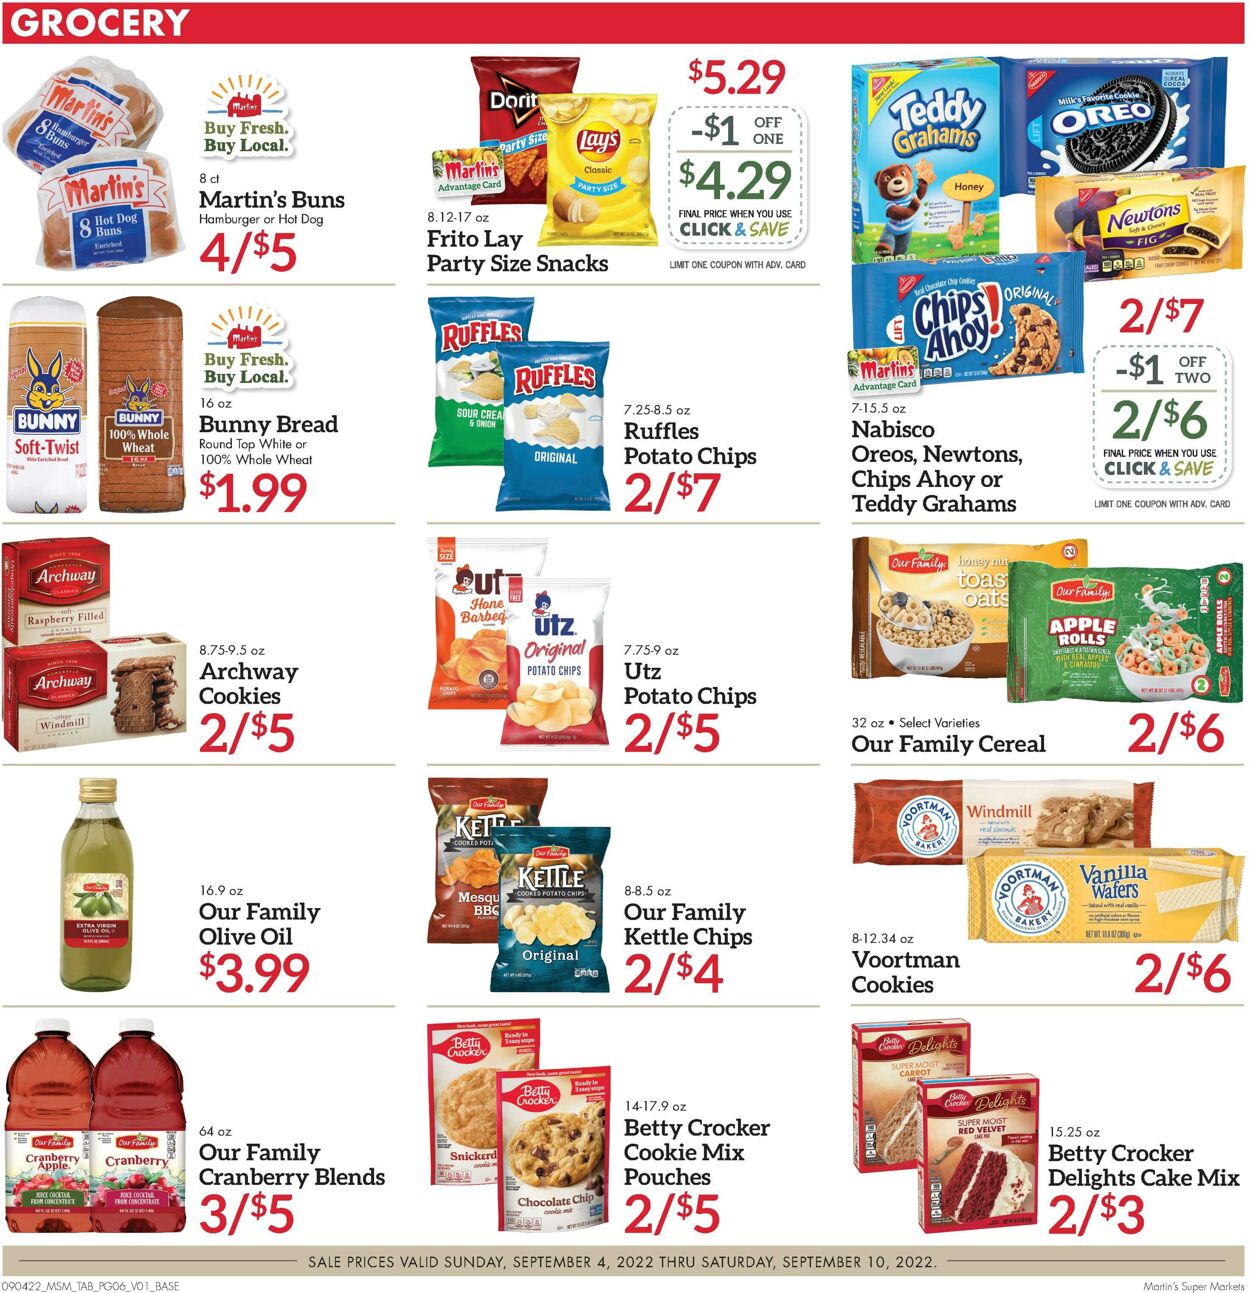 Weekly ad Martin's Supermarkets 09/04/2022 - 09/10/2022